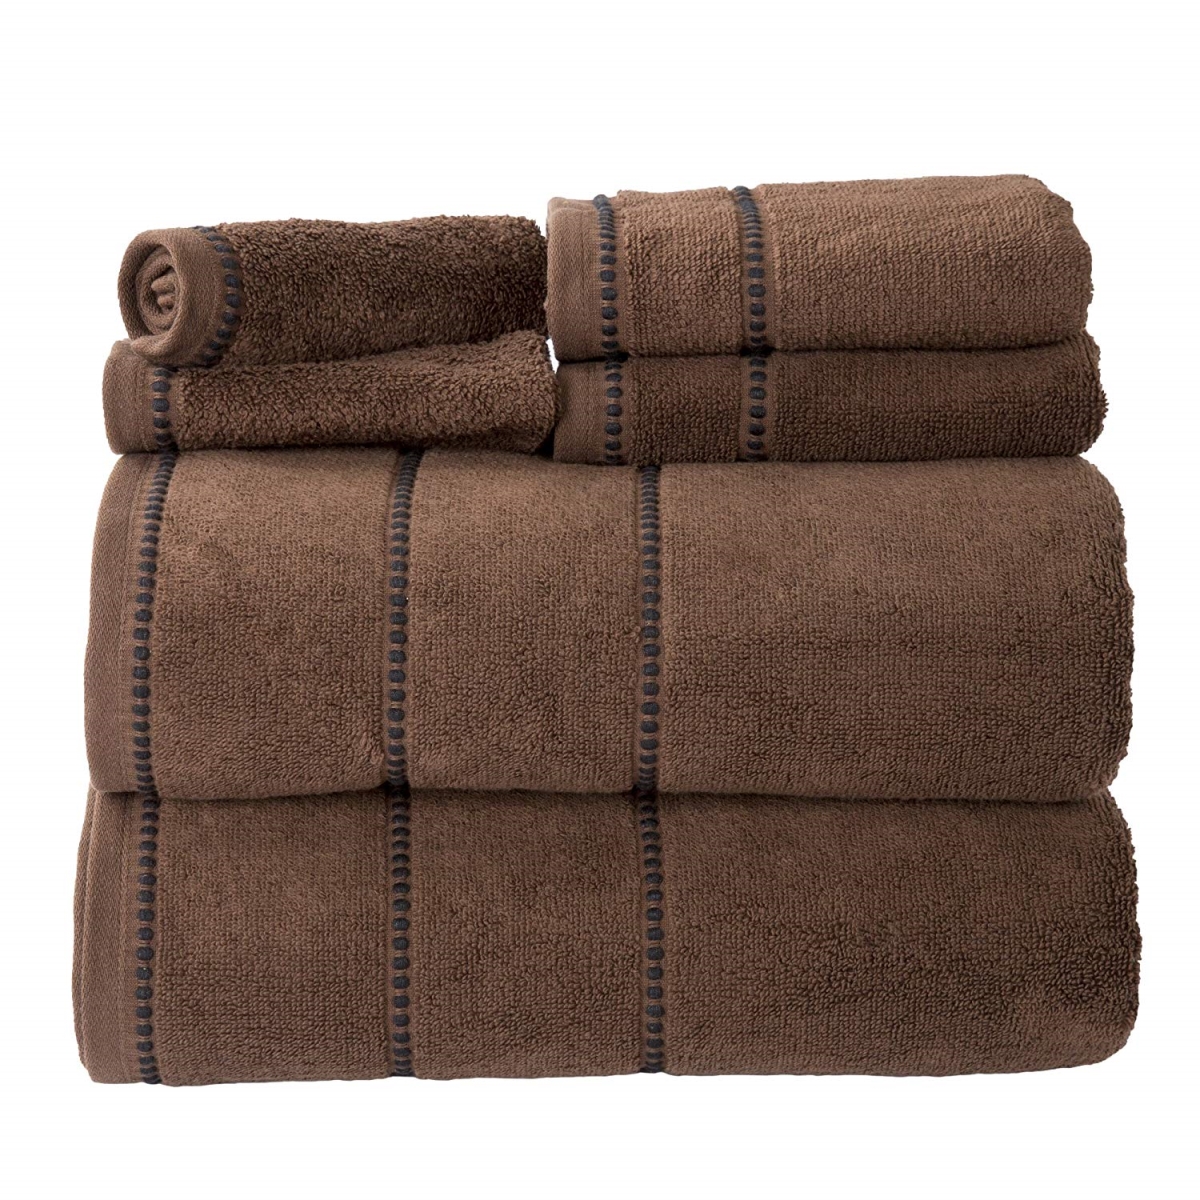 67a-76900 Quick Dry 100 Percent Cotton Zero Twist 6 Piece Towel Set - Chocolate